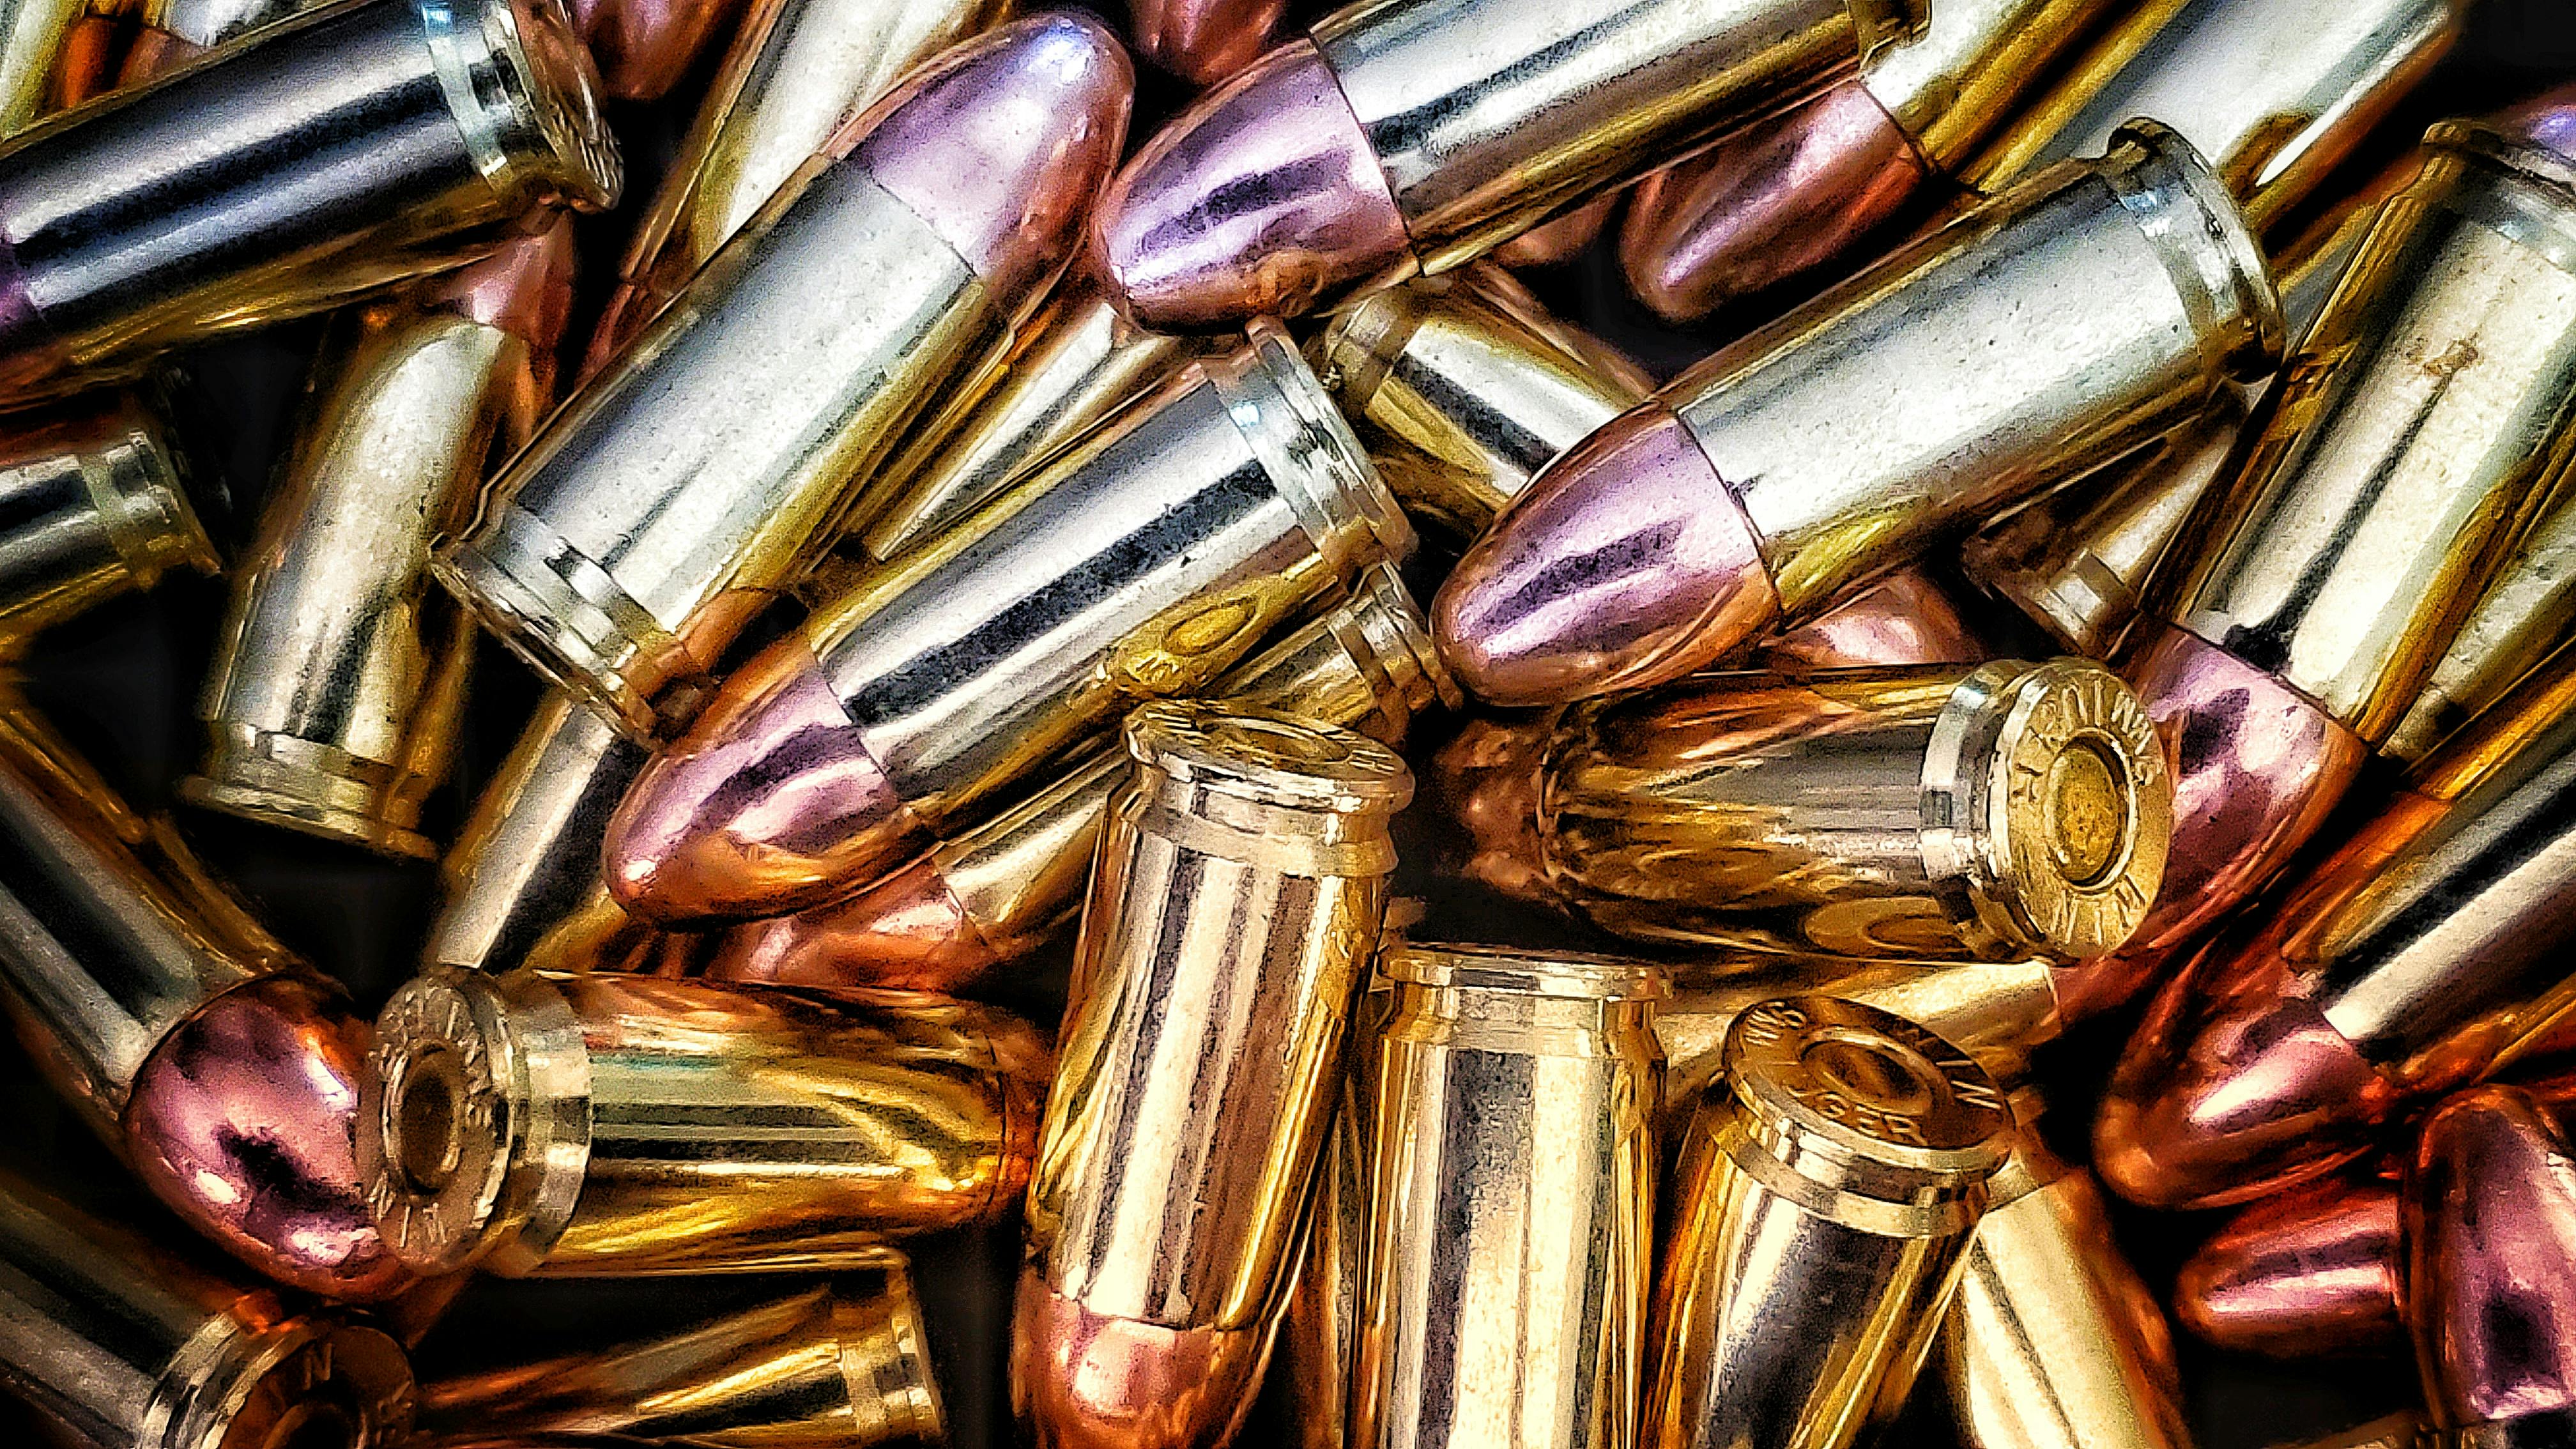 9mm brass ammo in stock